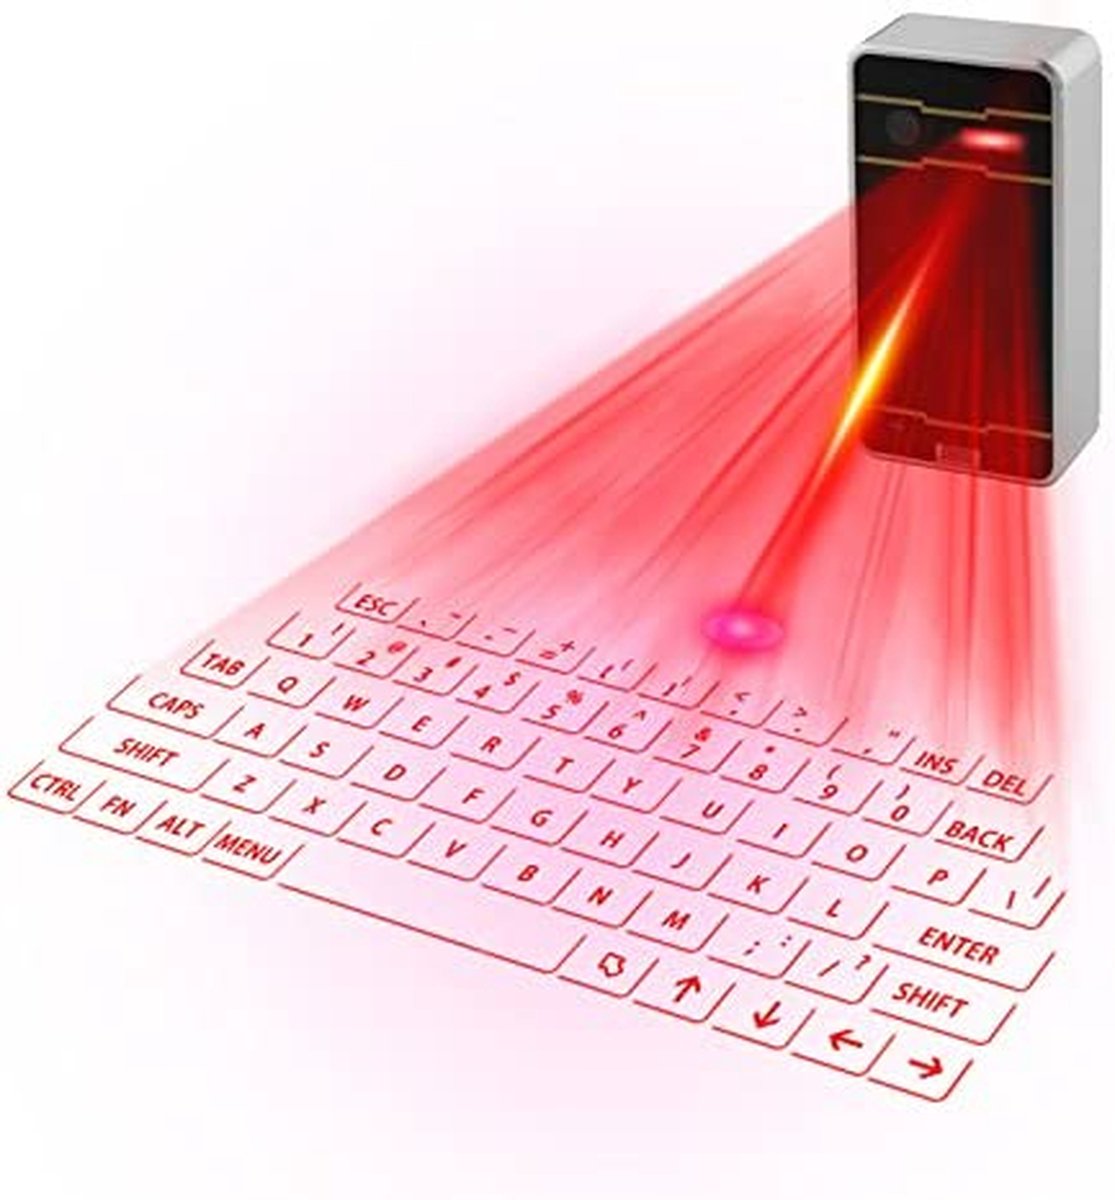 Premium virtuele laser toetsenbord - draadloos bluetooth mini toetsenbord - QWERTZ-lay-out voor smartphone tablet pc en laptop